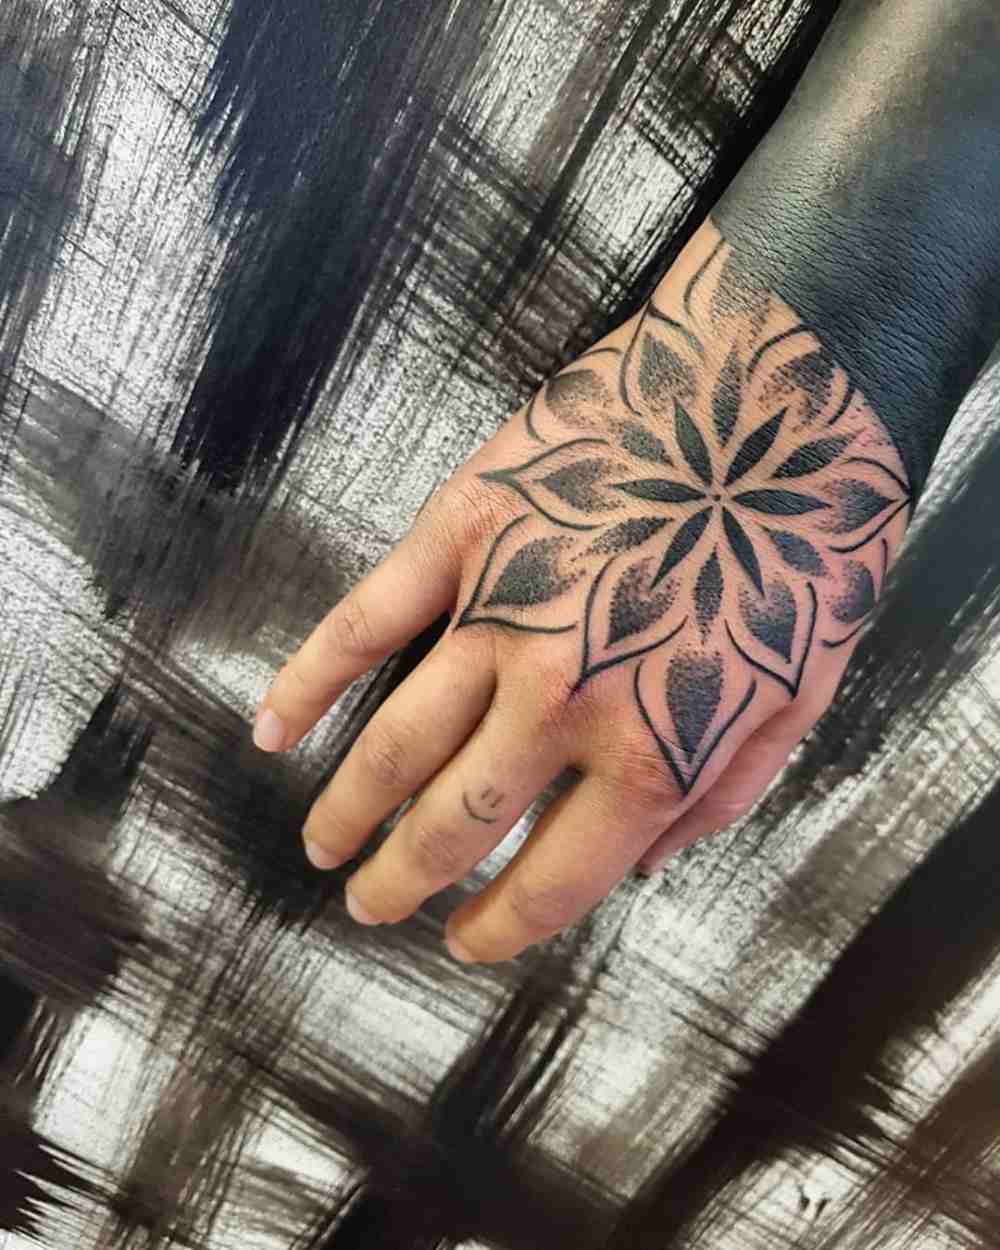 Mann hand tattoo What is